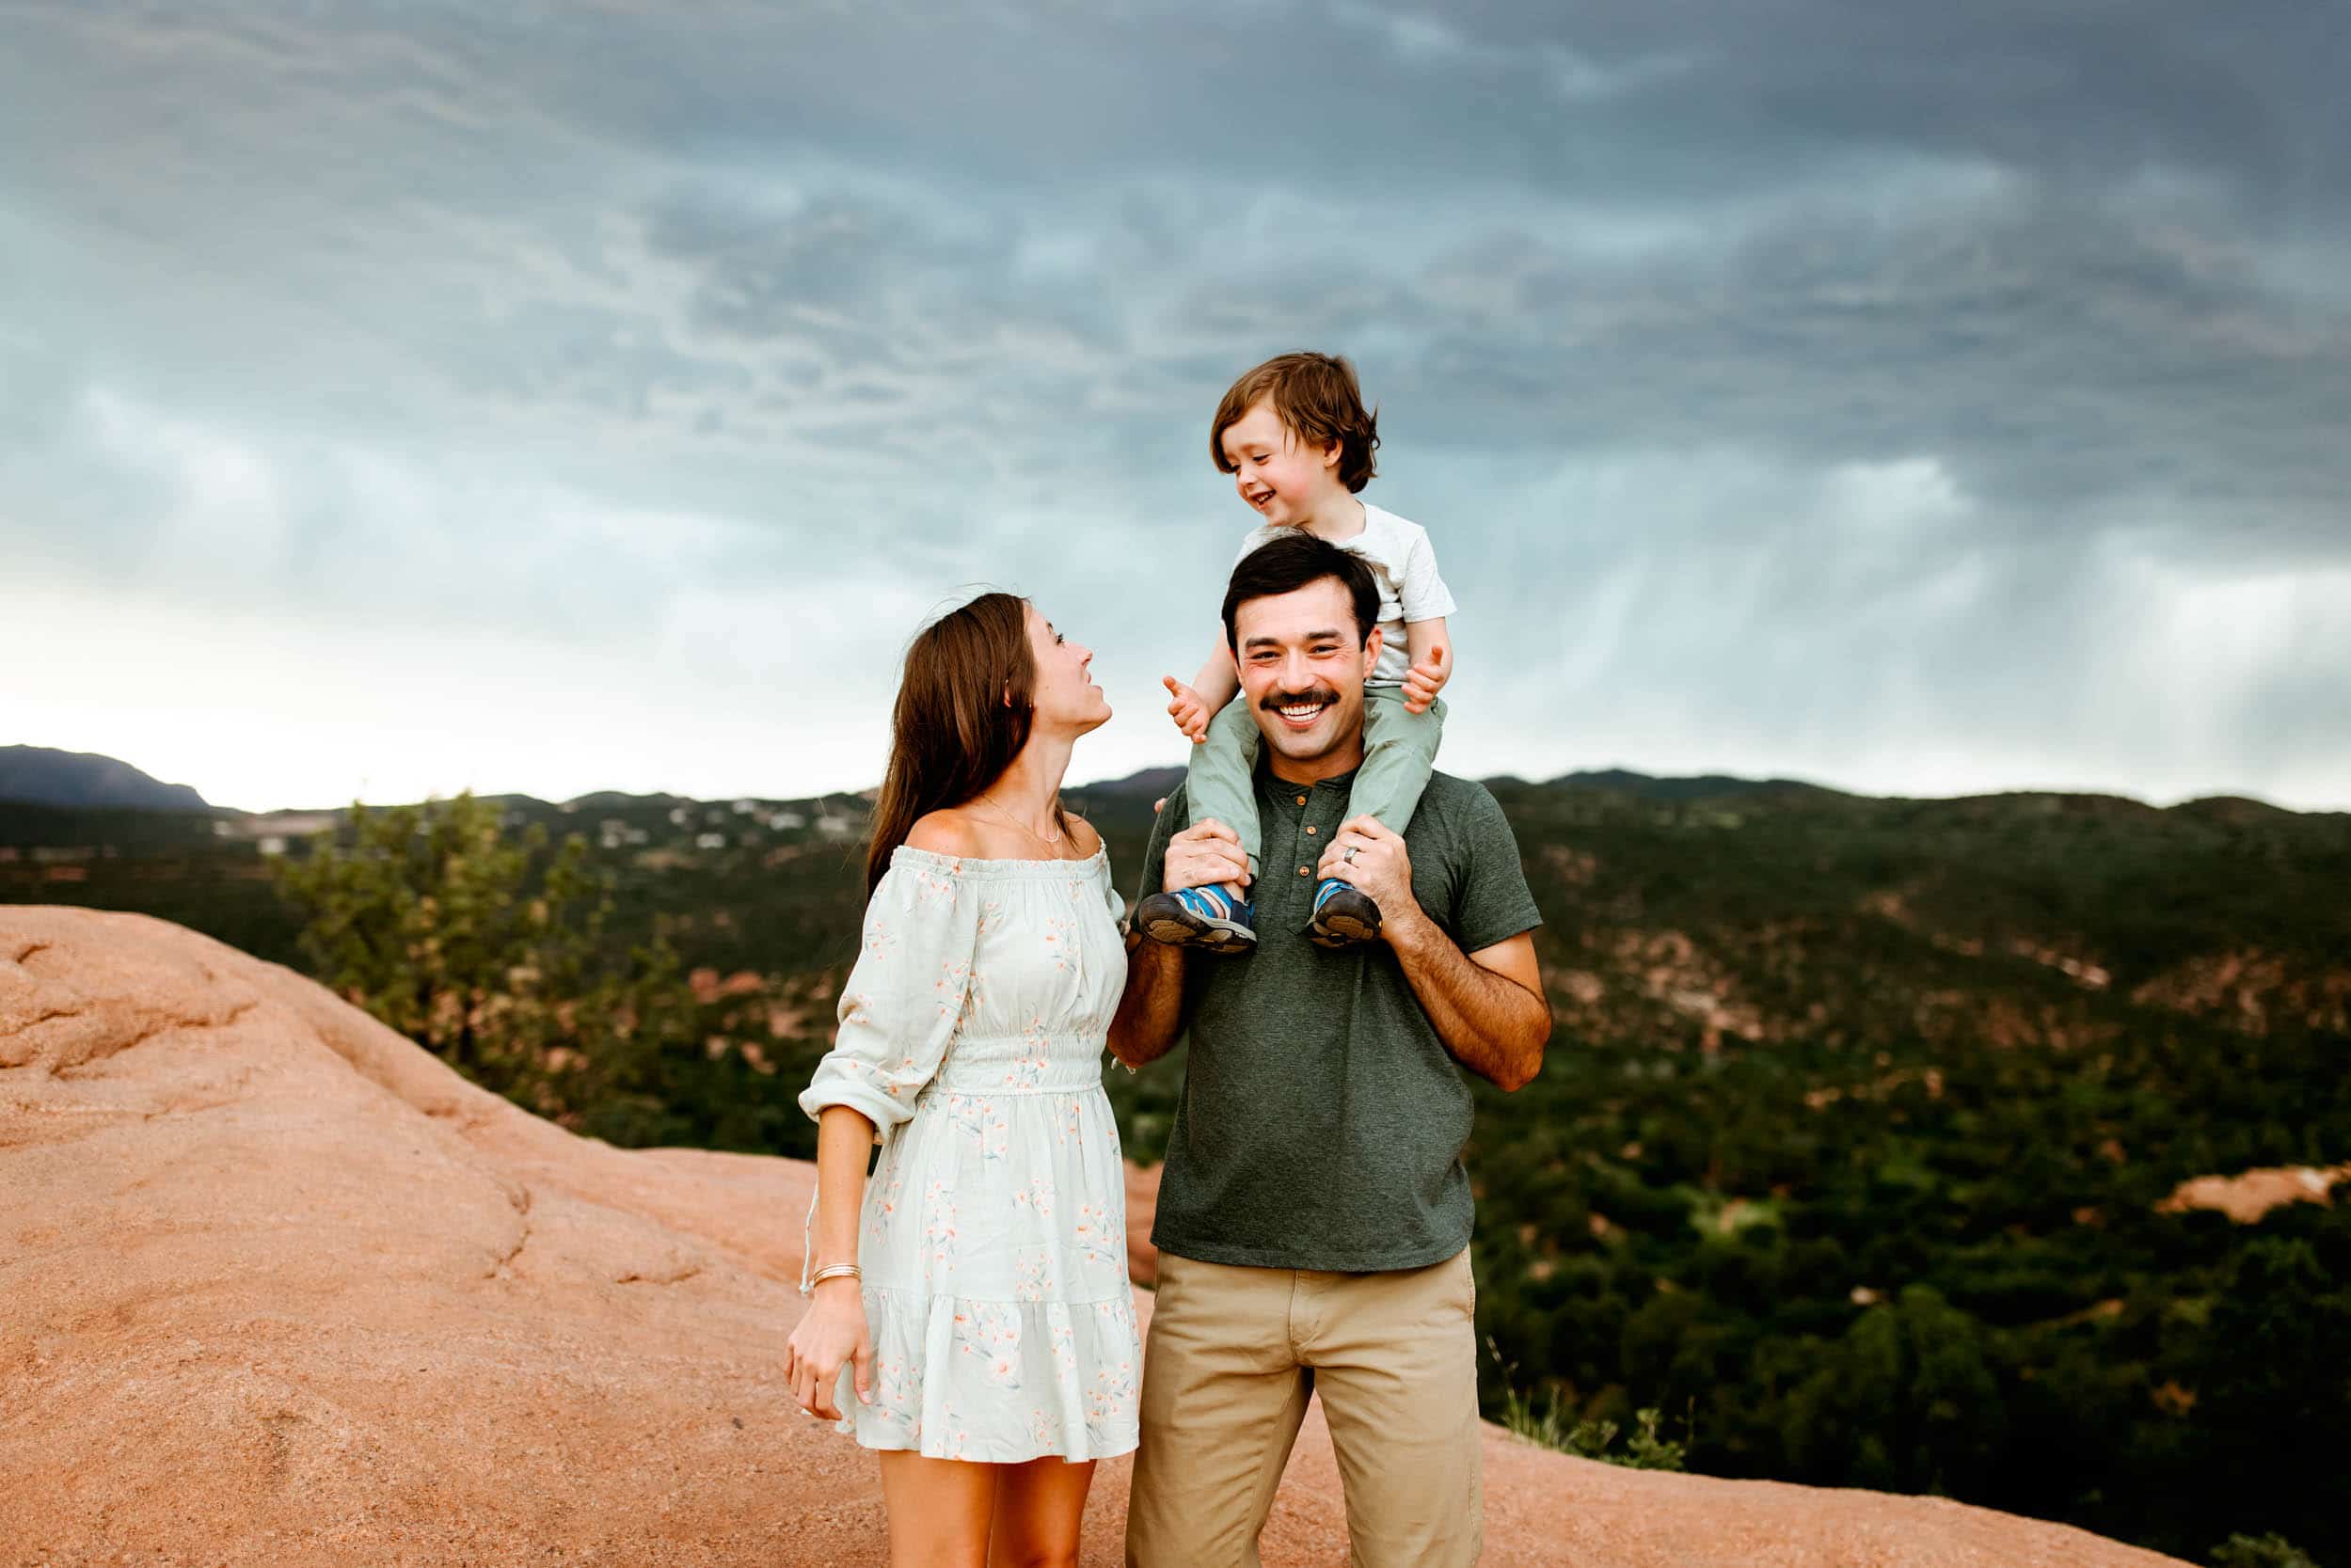 Colorado Springs Family Photographer